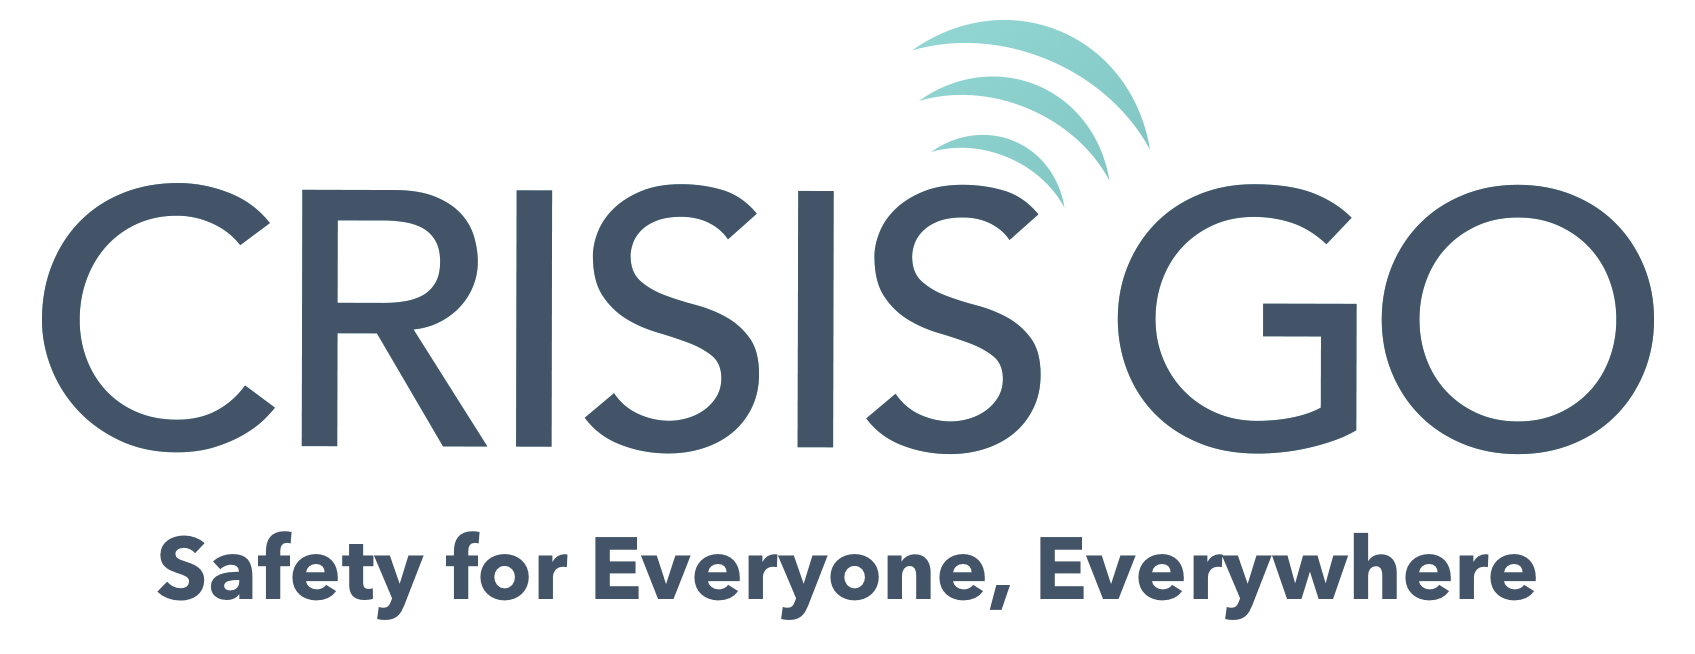 crisisgo | safety for everyone, everywhere